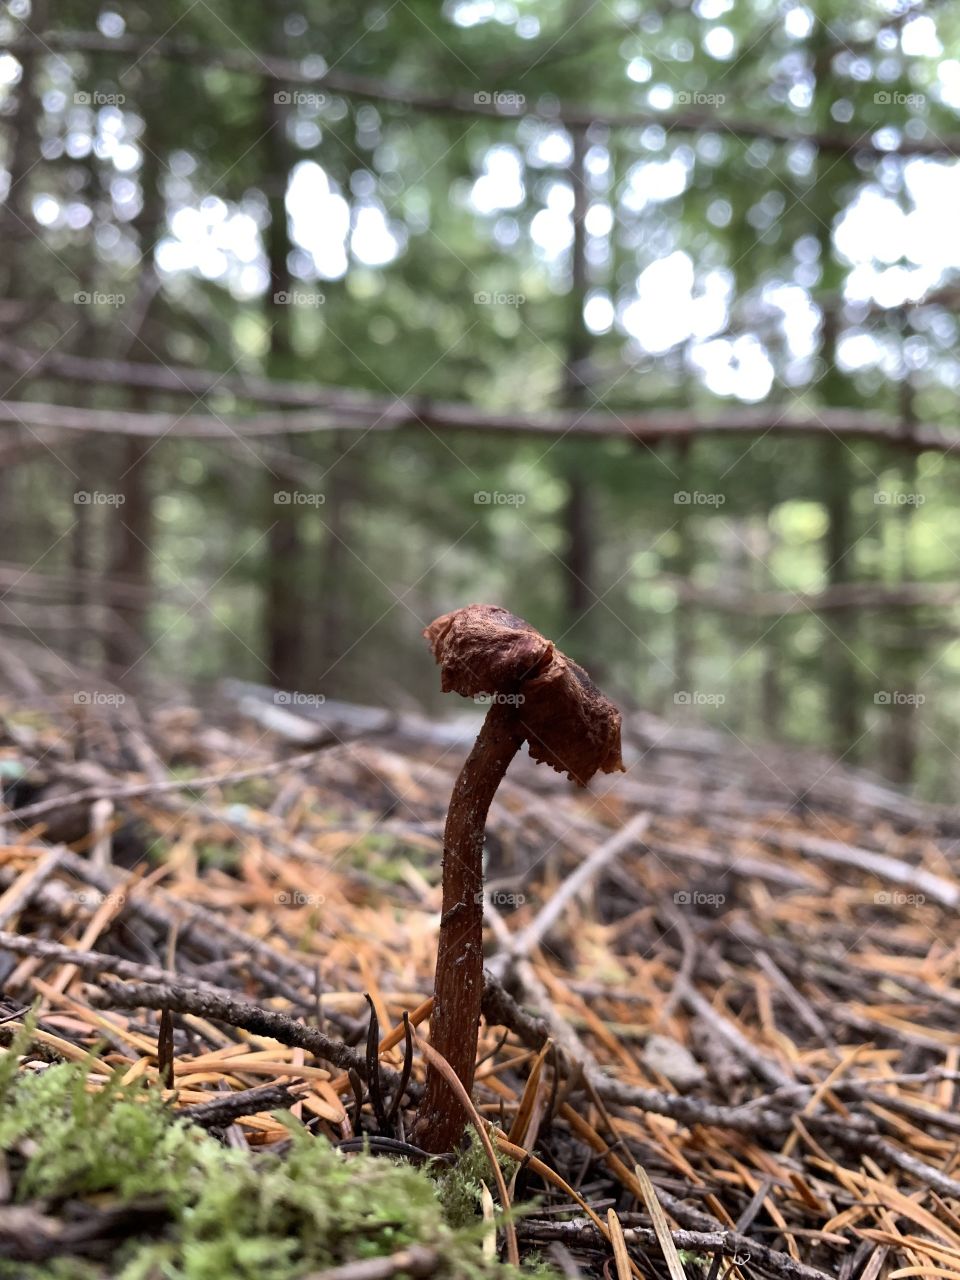 Umbrella mushroom 